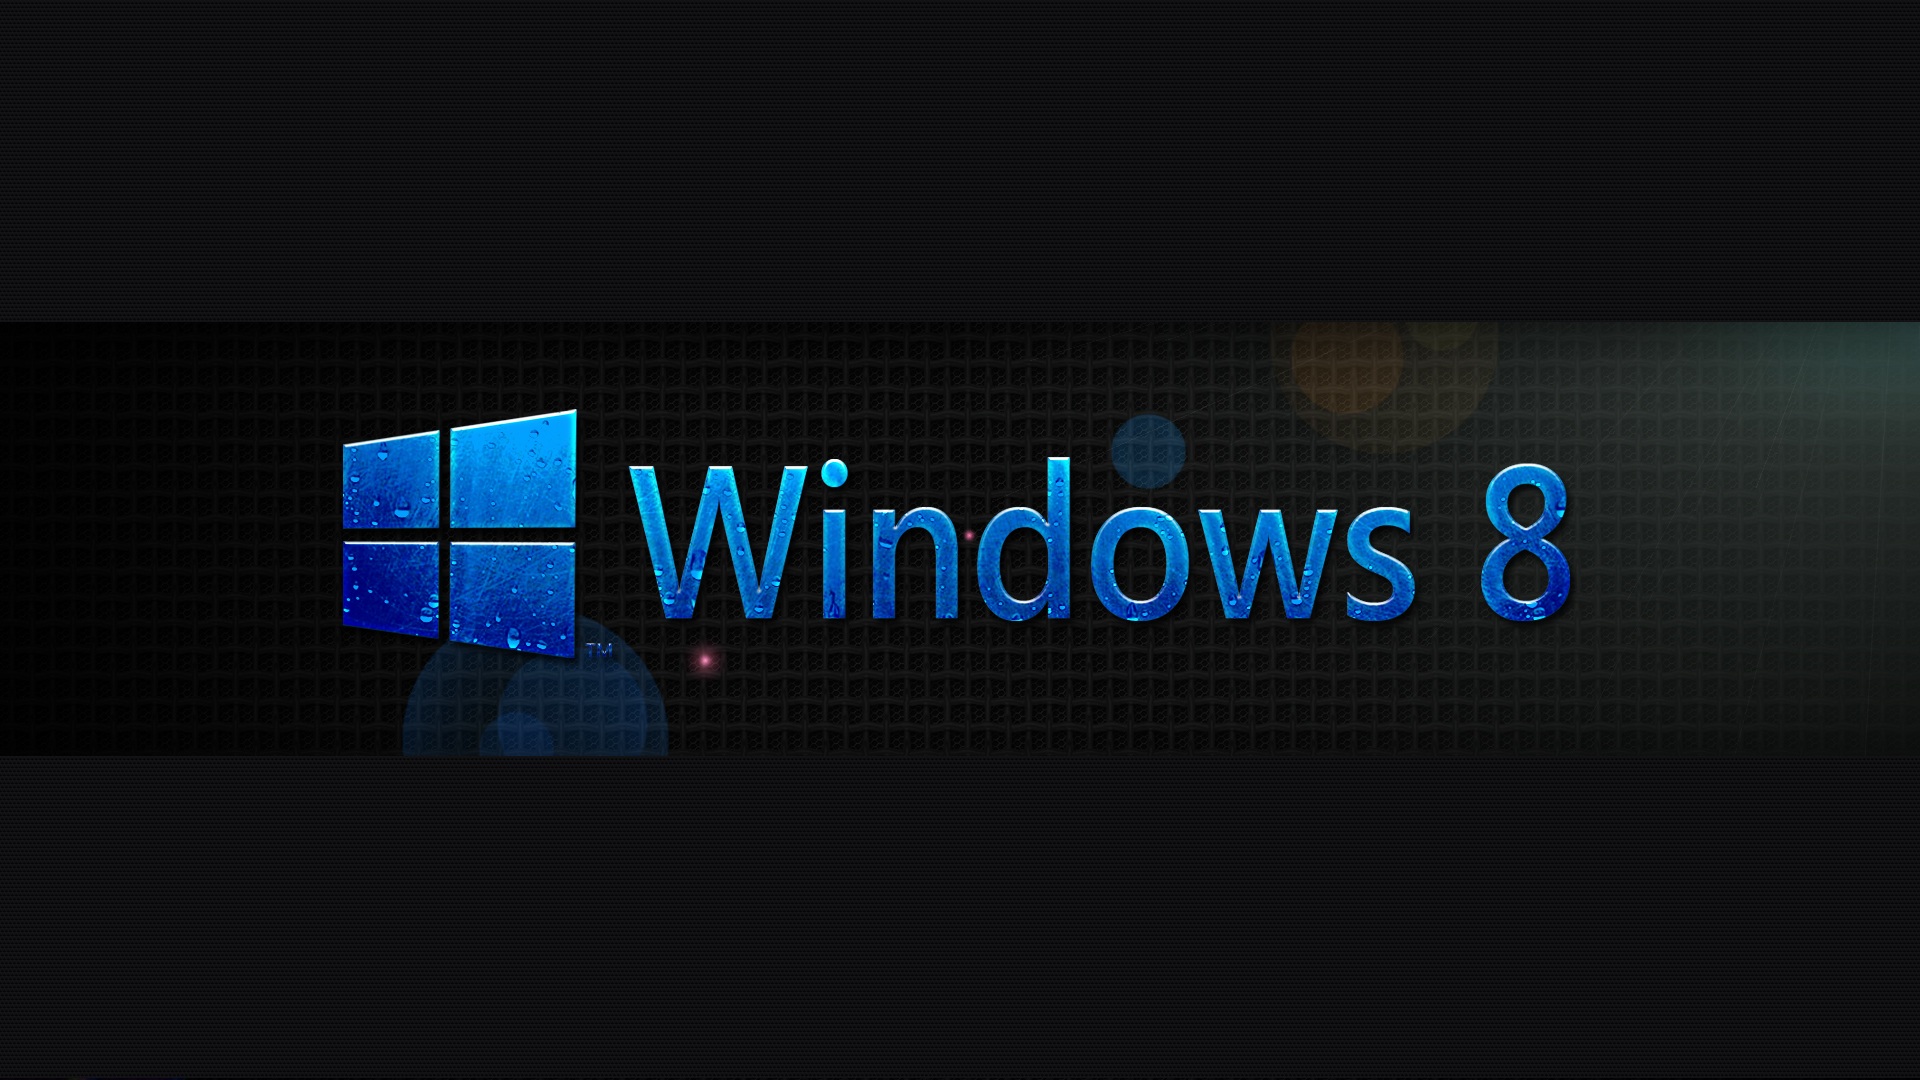 Windows 8 wallpapers best desktop background images free download